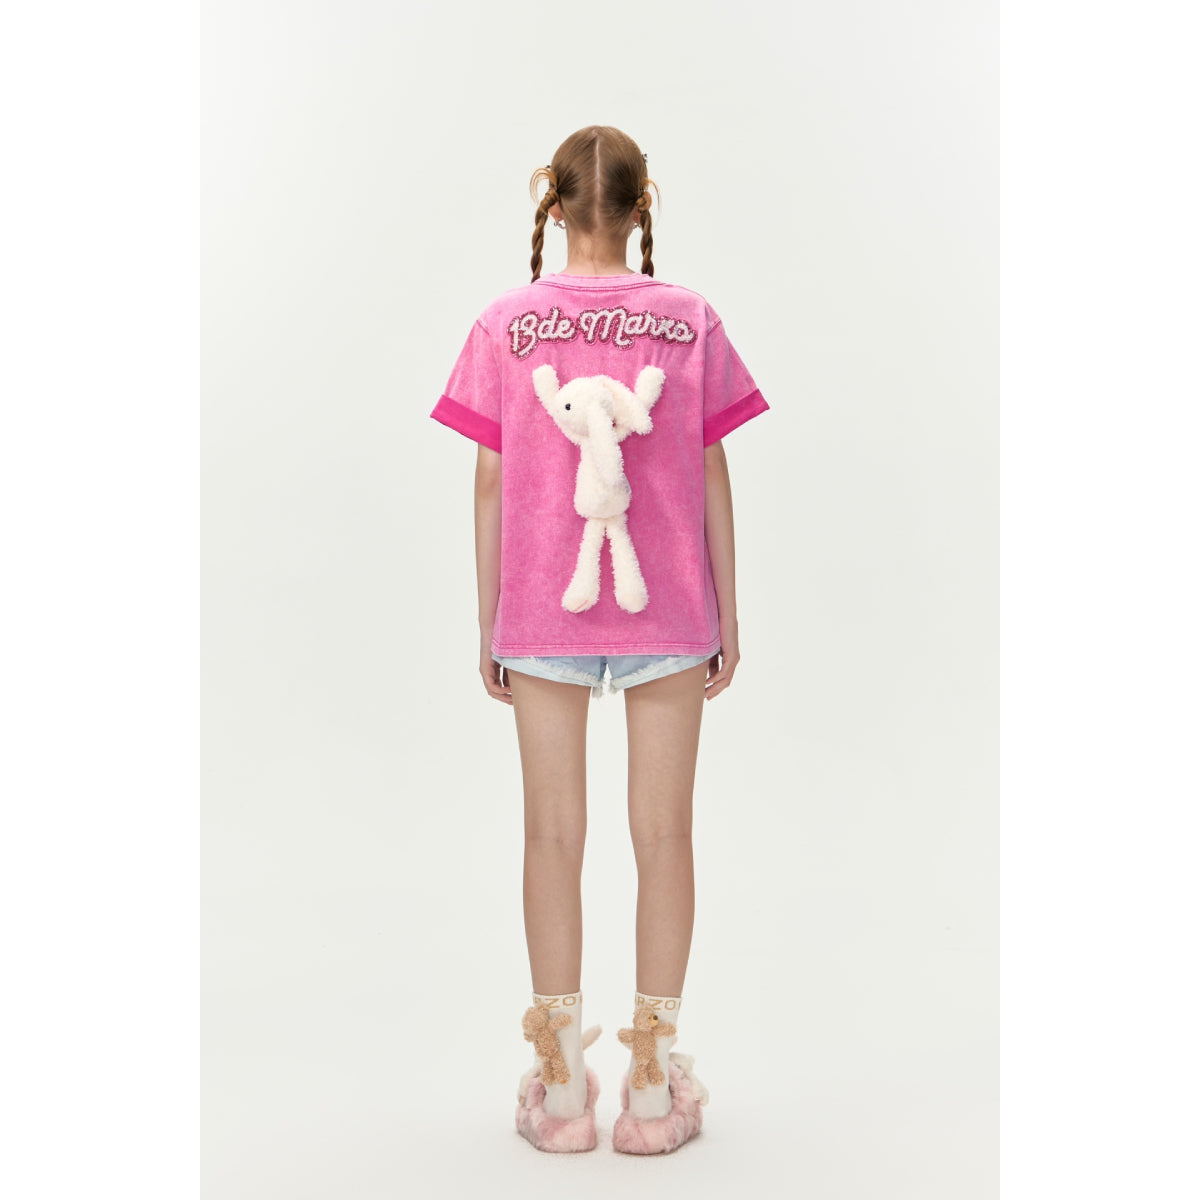 13DE MARZO Washed Sequins Logo T-Shirt Pink